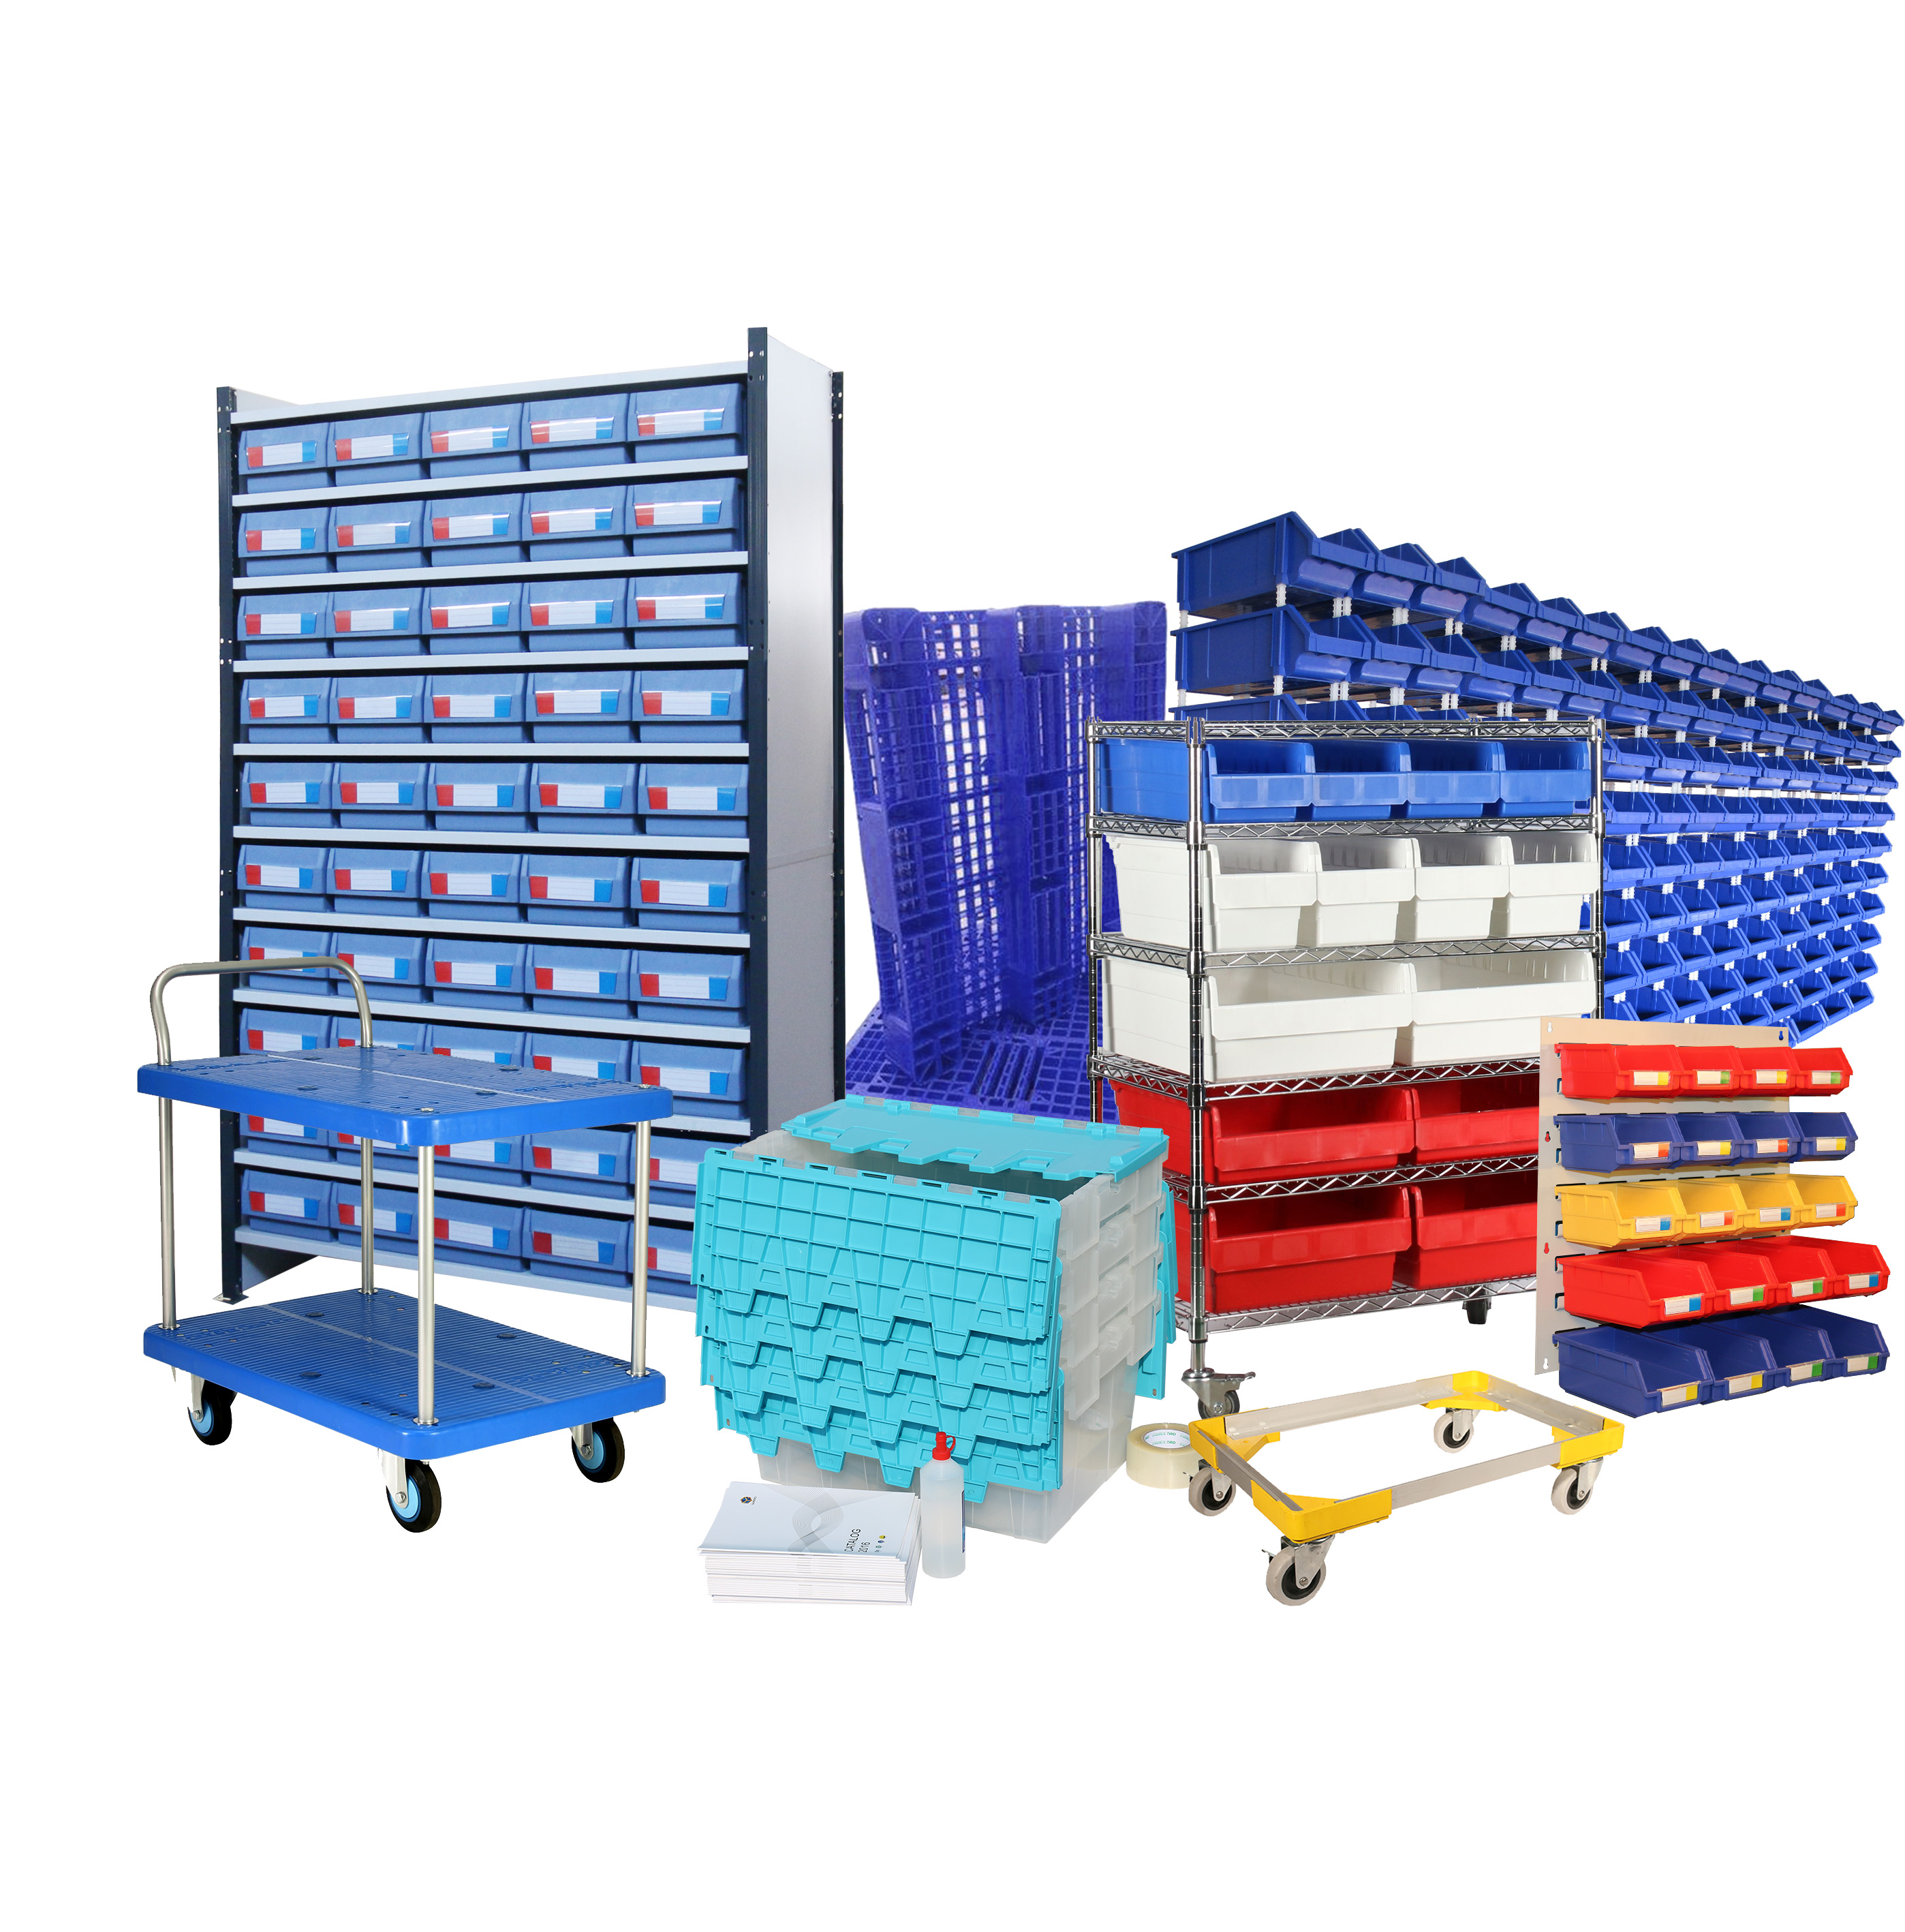 Storage handling and organization products manufacturer